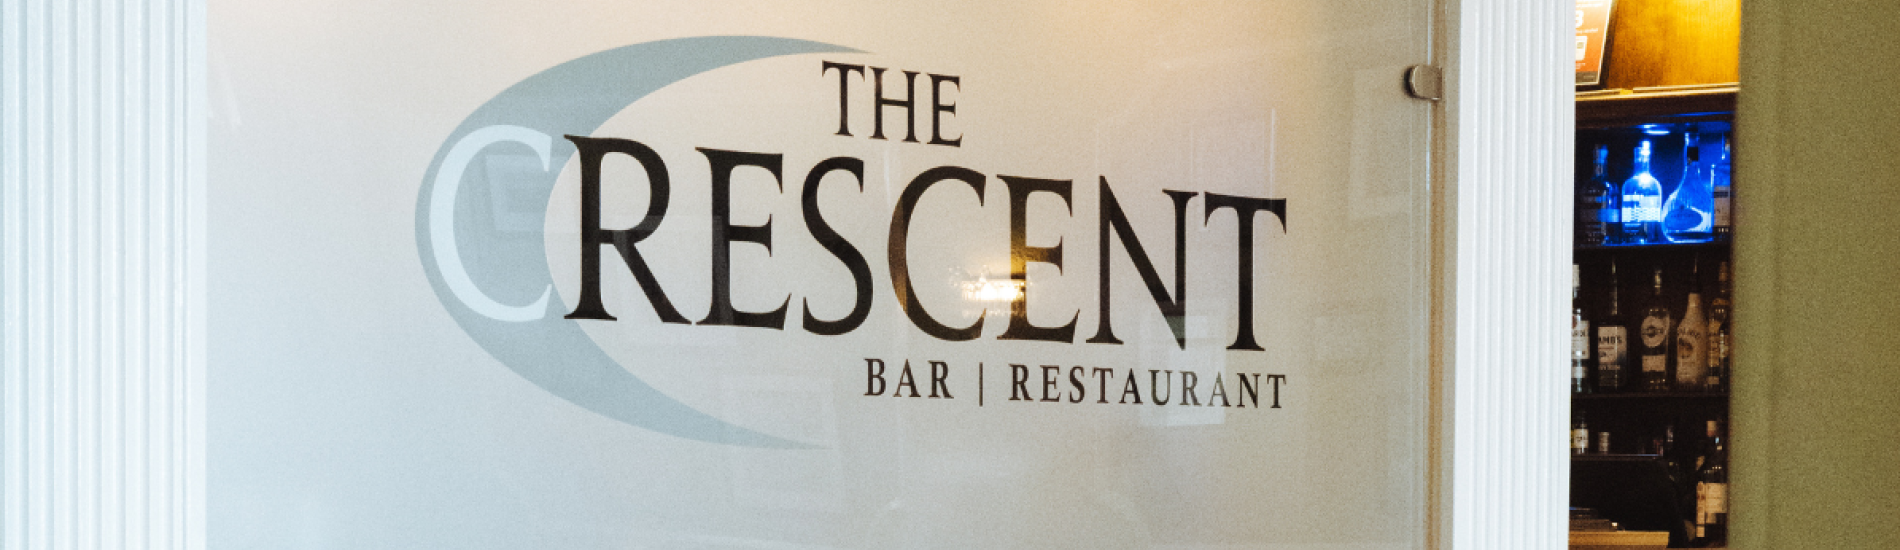 The Crescent Restaurant Logo